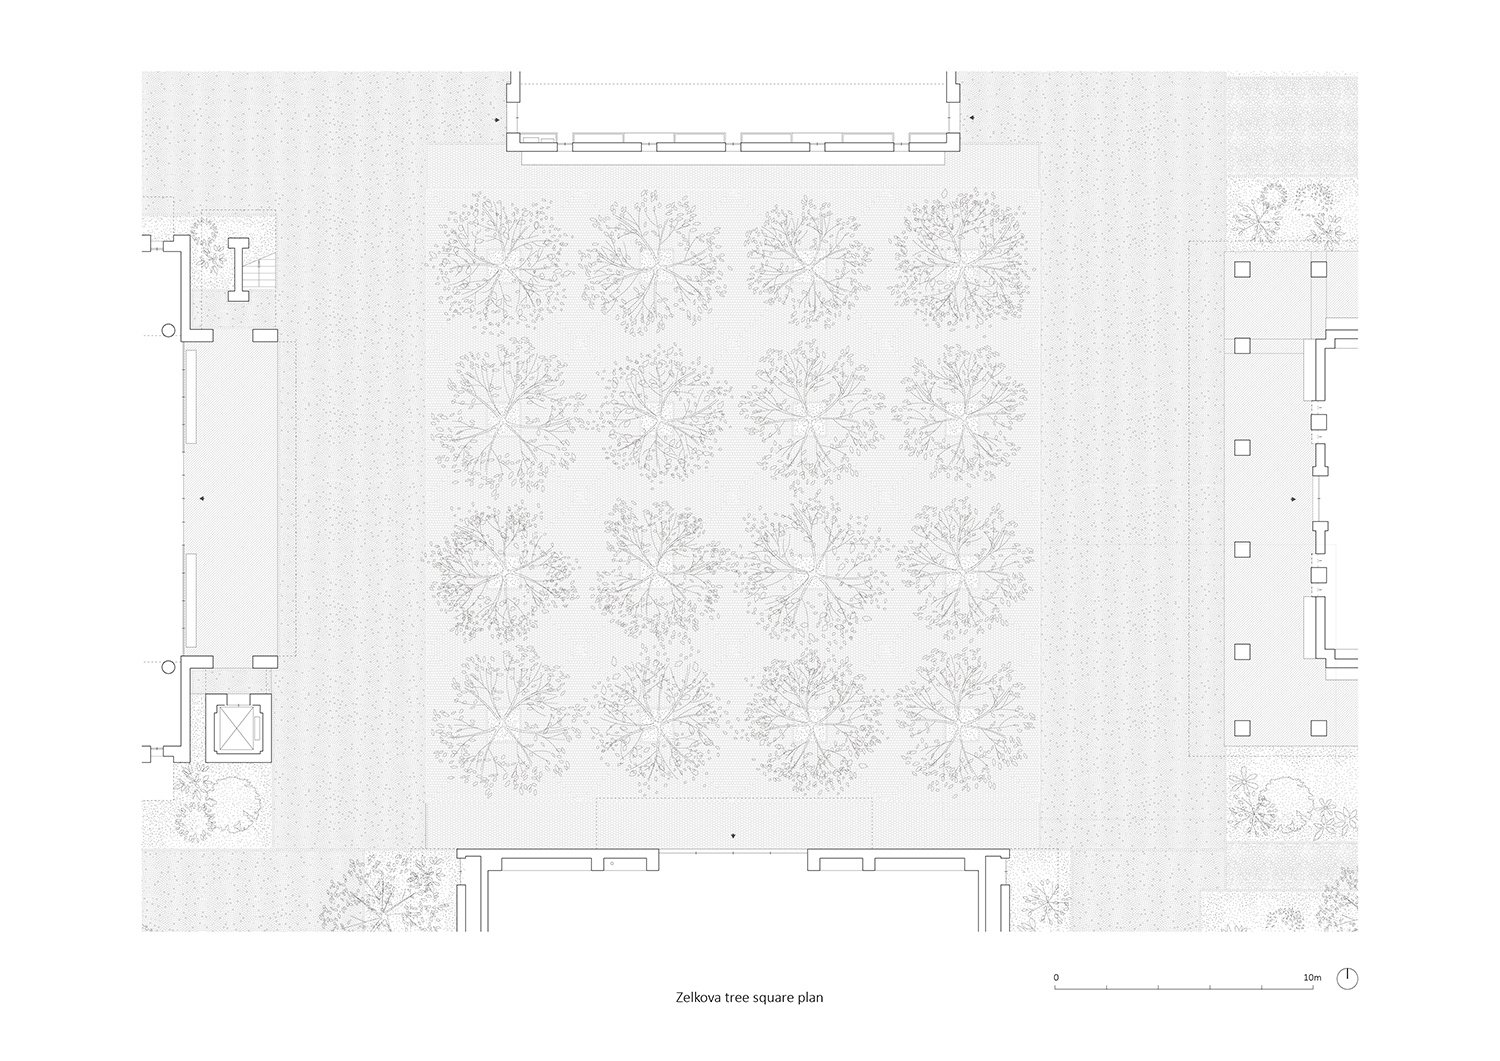 Zelkova tree square plan | genarchitects